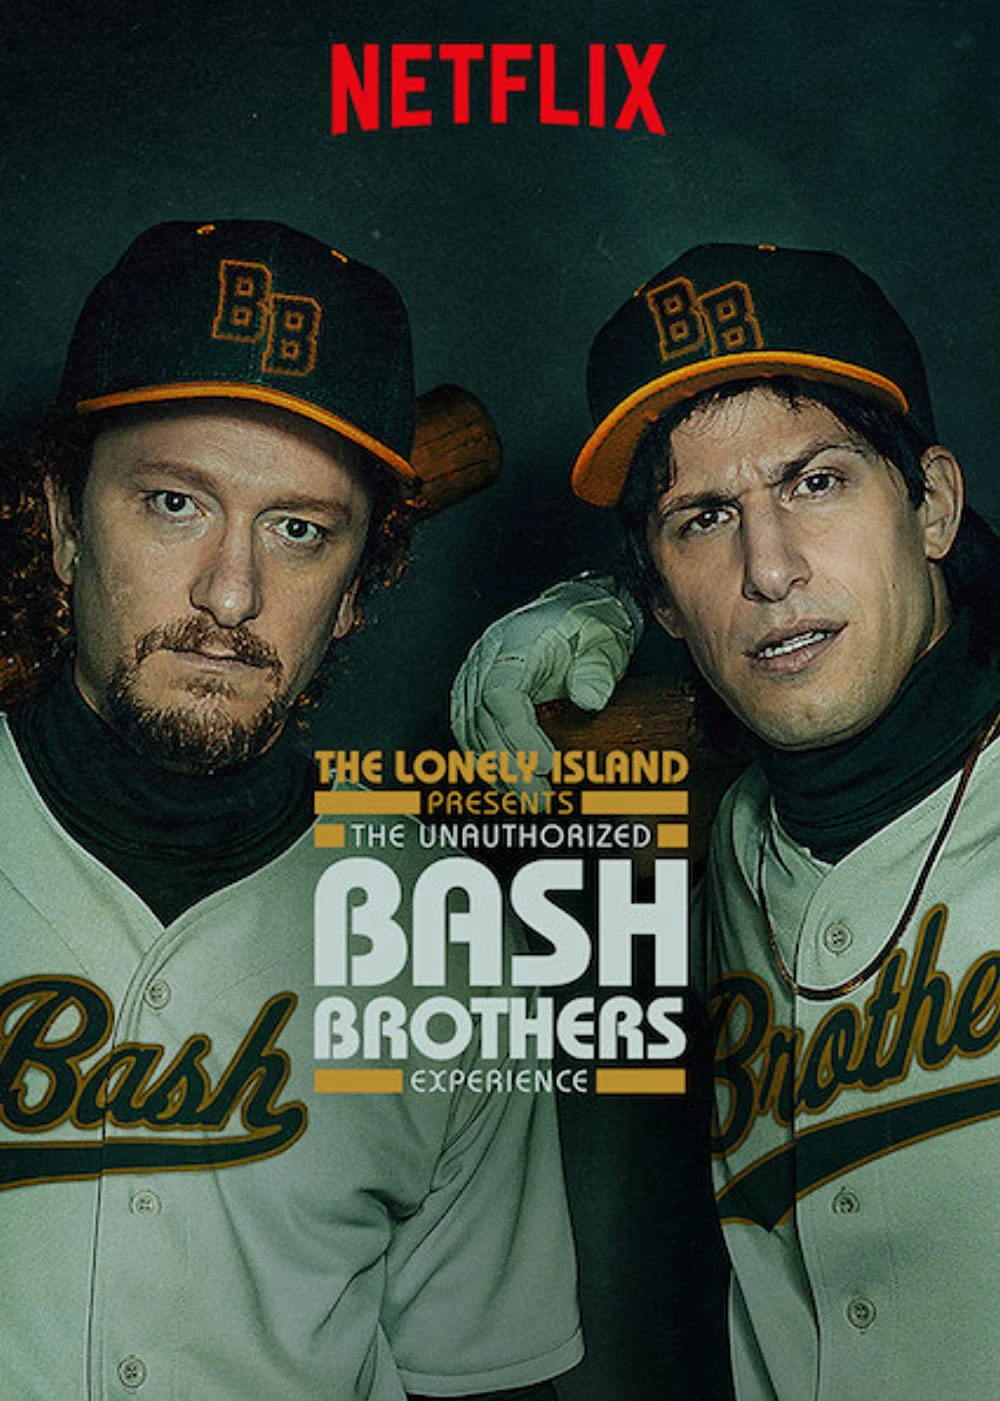 The Lonely Island: Chuyện vui về cặp đôi bóng chày | The Lonely Island Presents: The Unauthorized Bash Brothers Experience (2019)